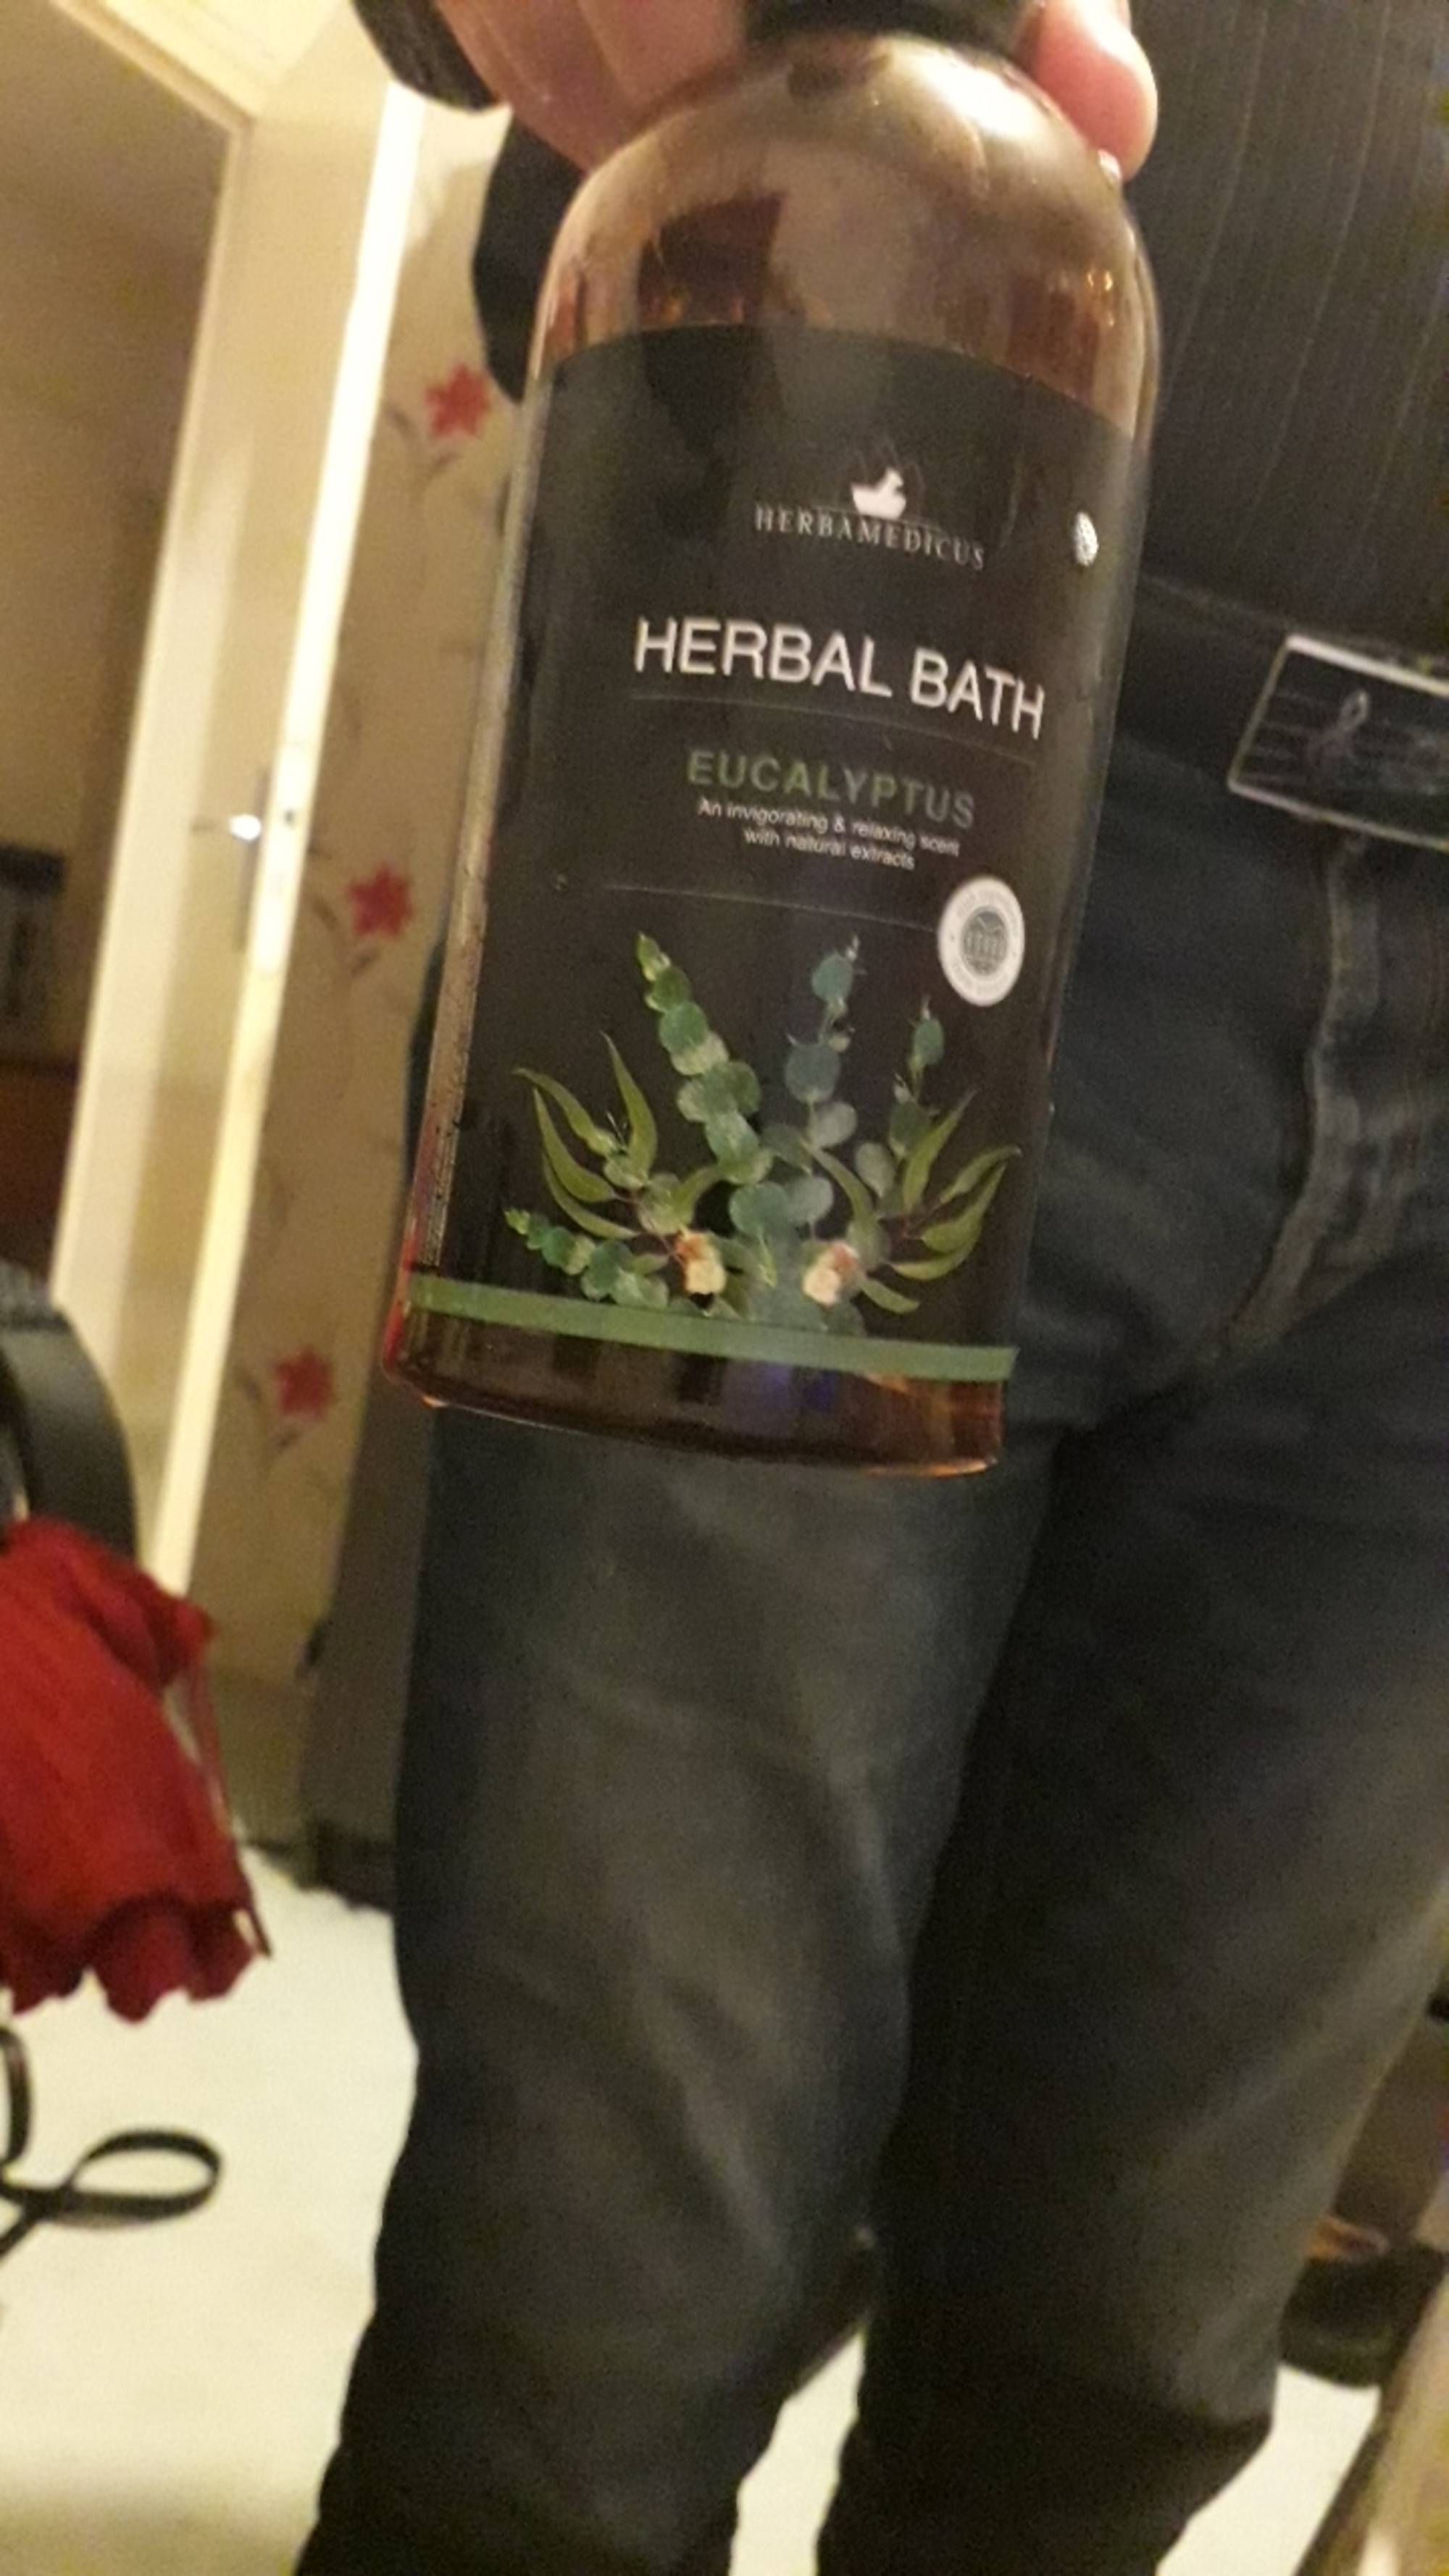 HERBAMEDICUS - Herbal bath - Eucalyptus